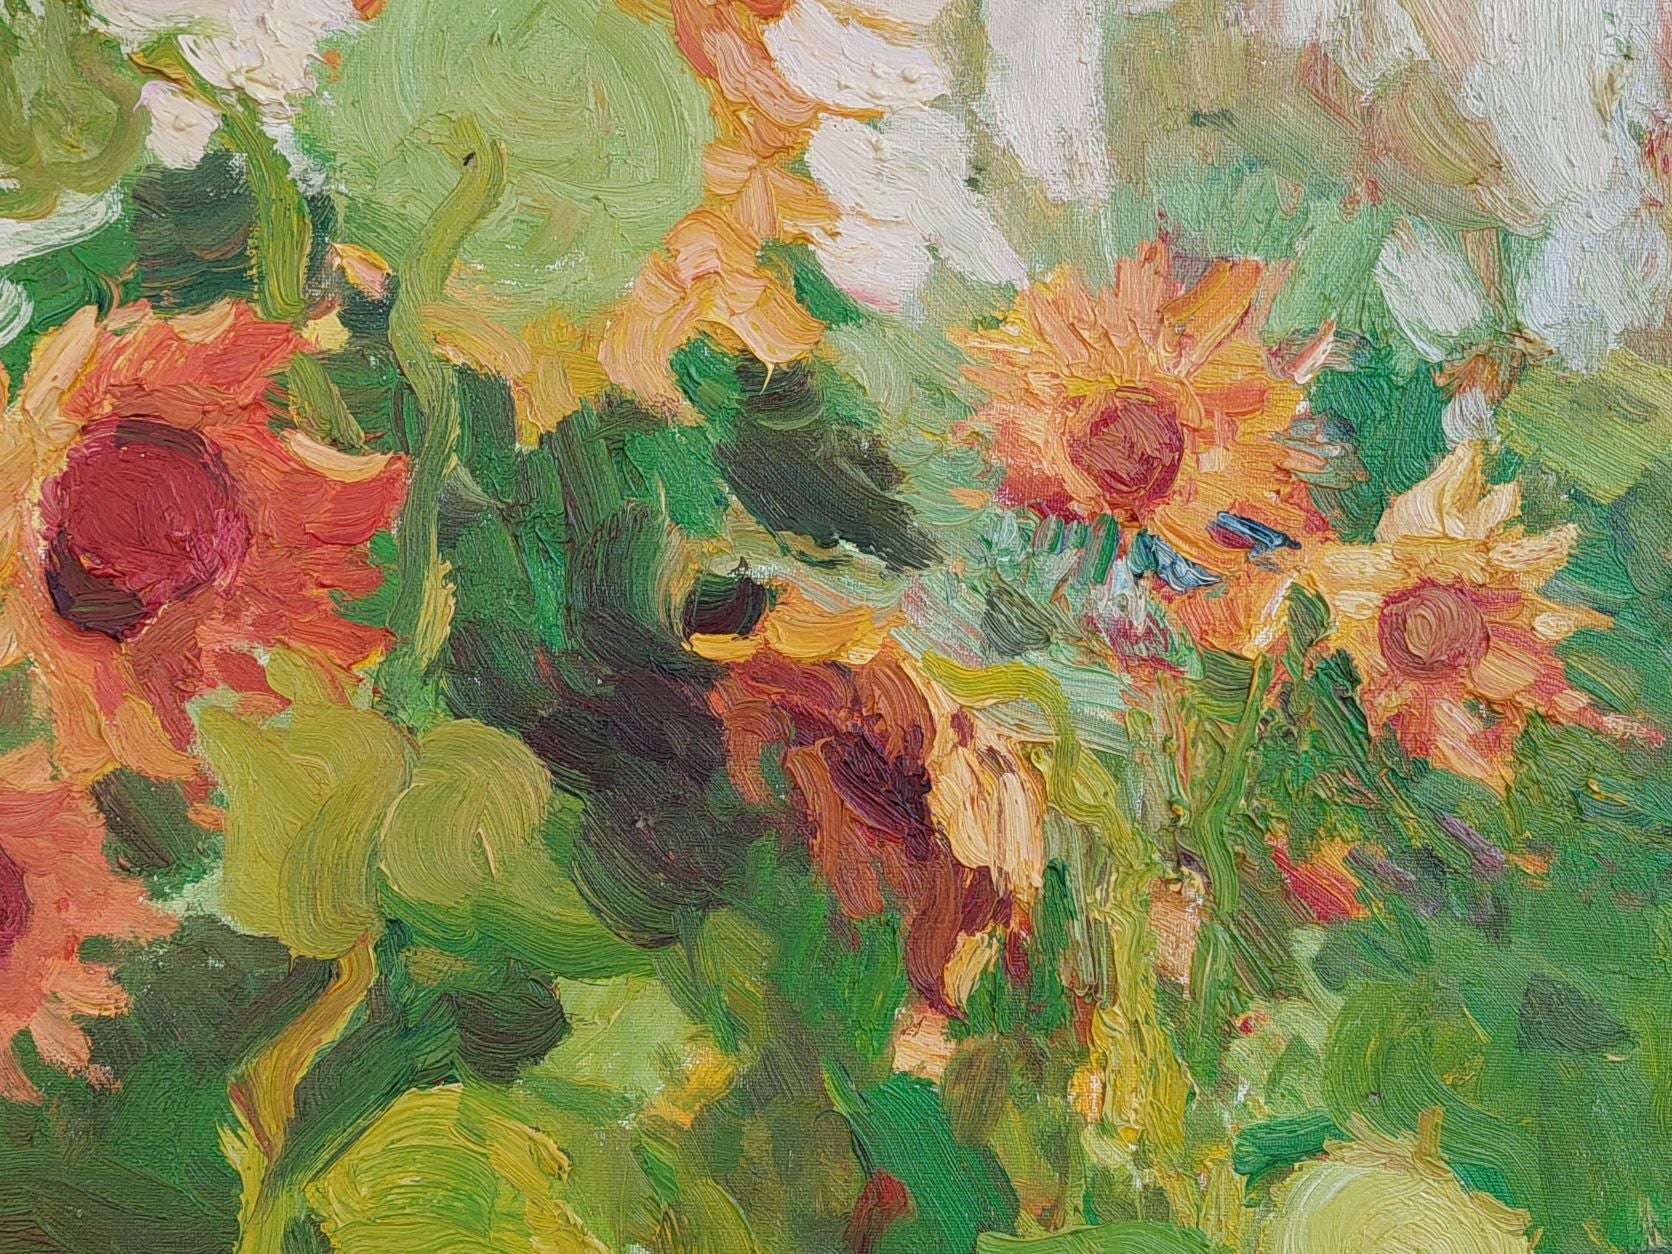 Sunflowers (2019) by Oleksandr Khrapachov